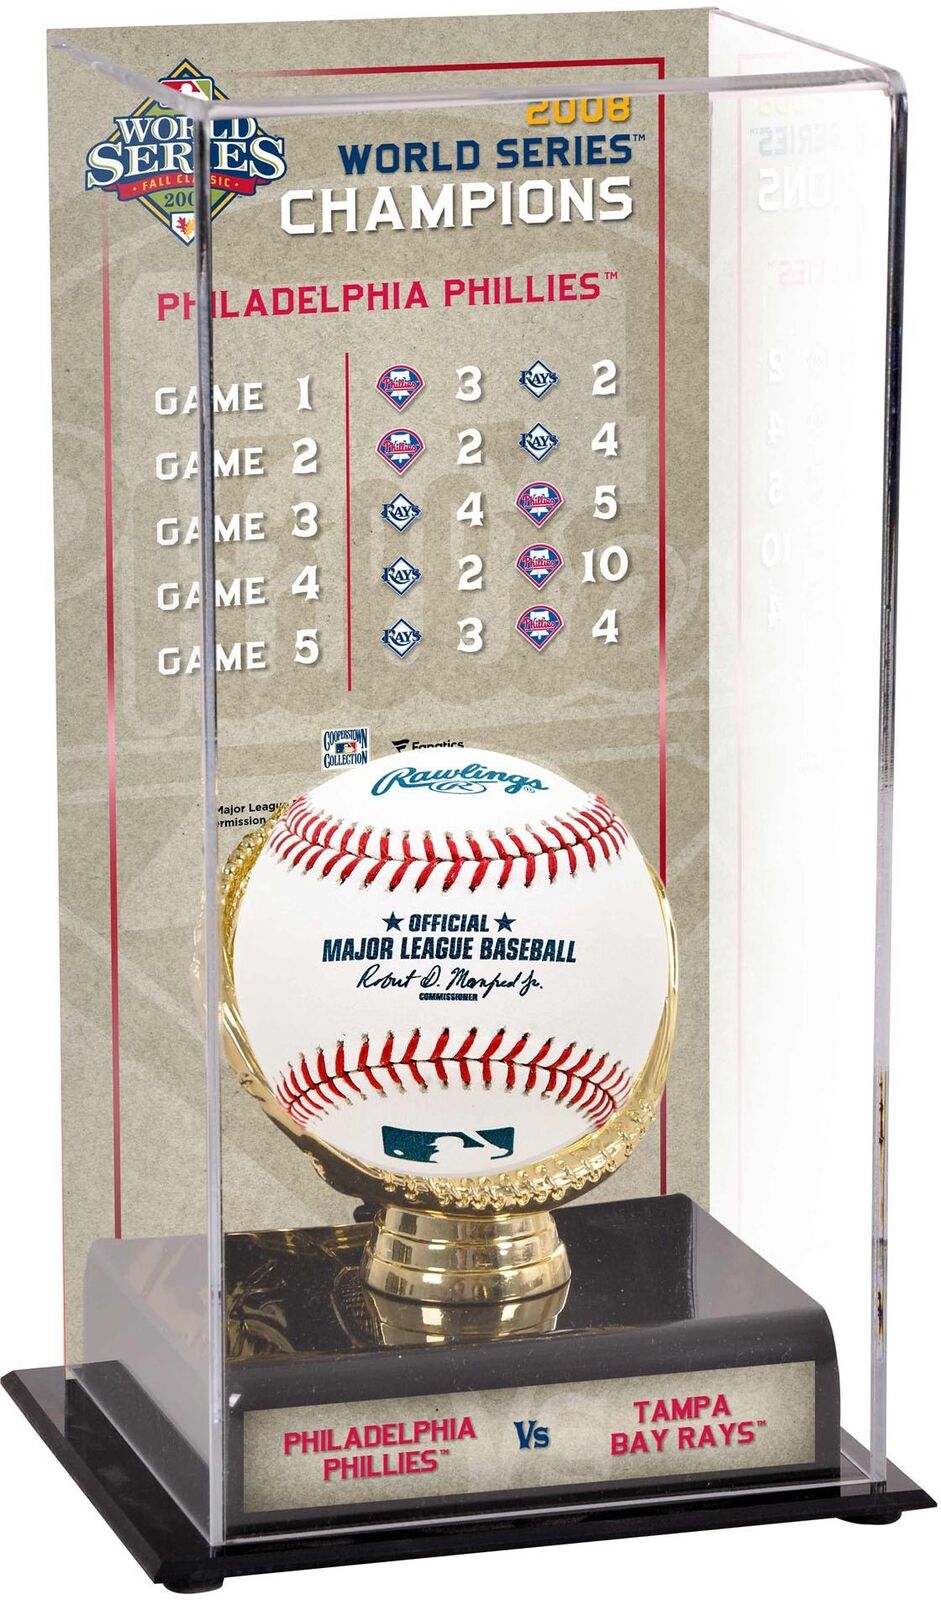 Philadelphia Phillies 2008 World Series Champs Case & Series Listing Image